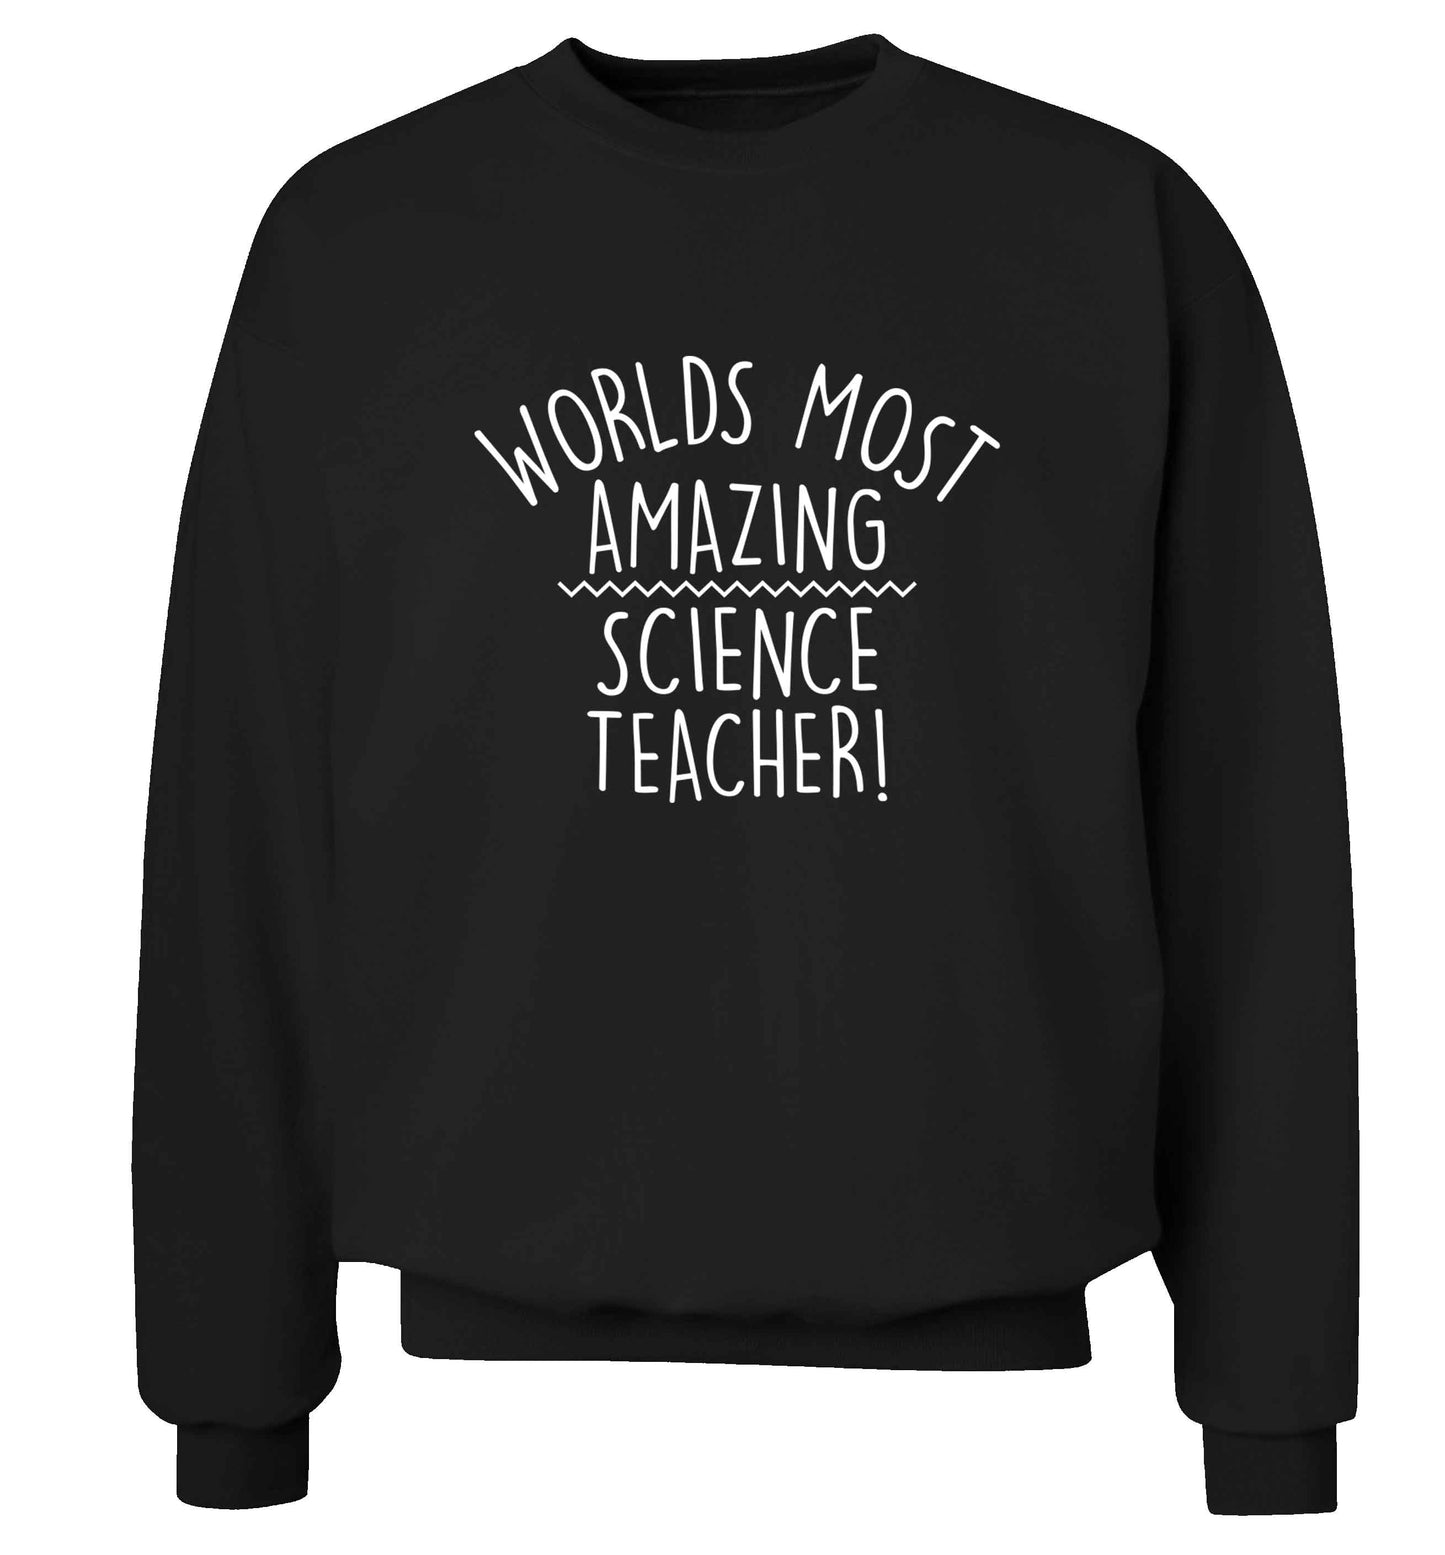 Worlds most amazing science teacher adult's unisex black sweater 2XL